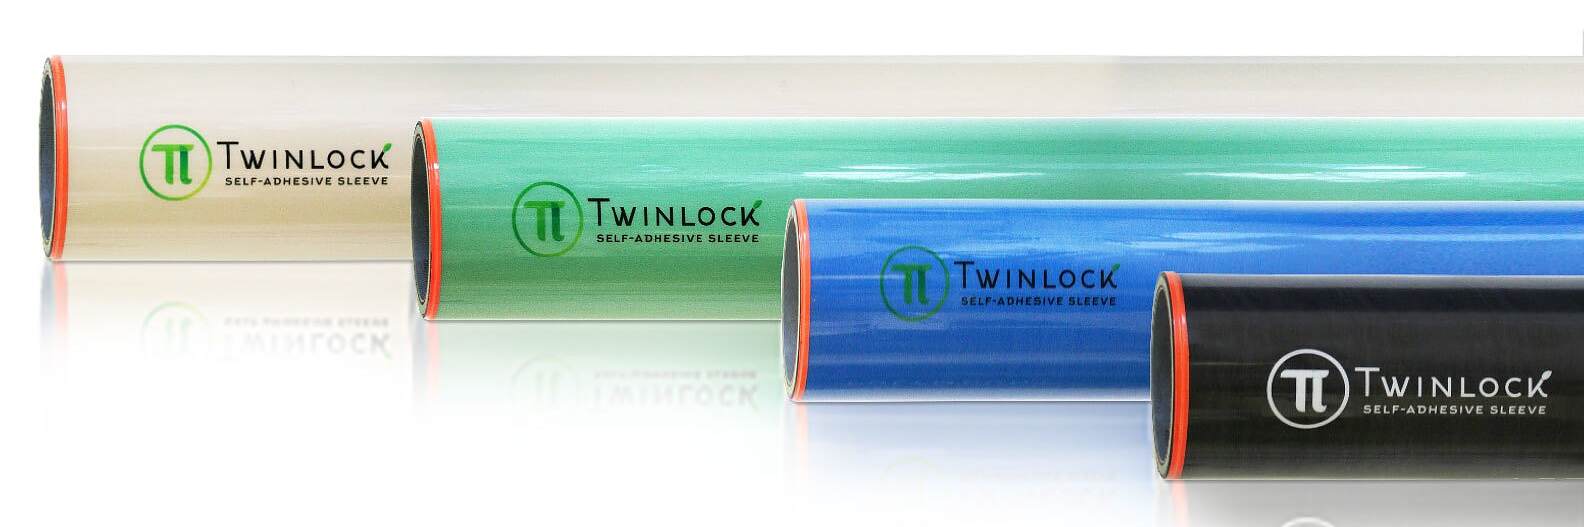 tesa SE acquires twinlock